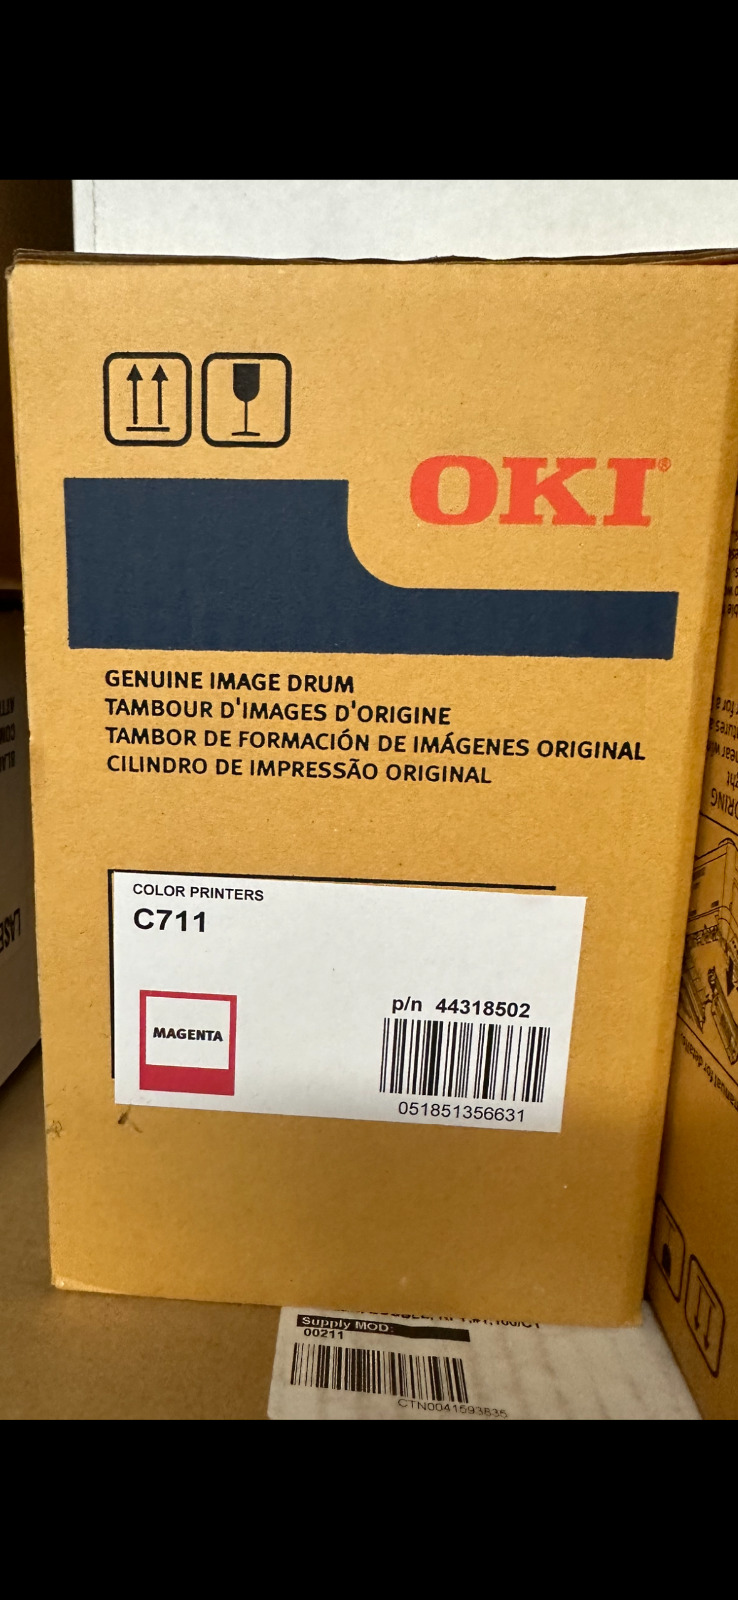 OKI C711 MAGENTA Image Drum NEW in box